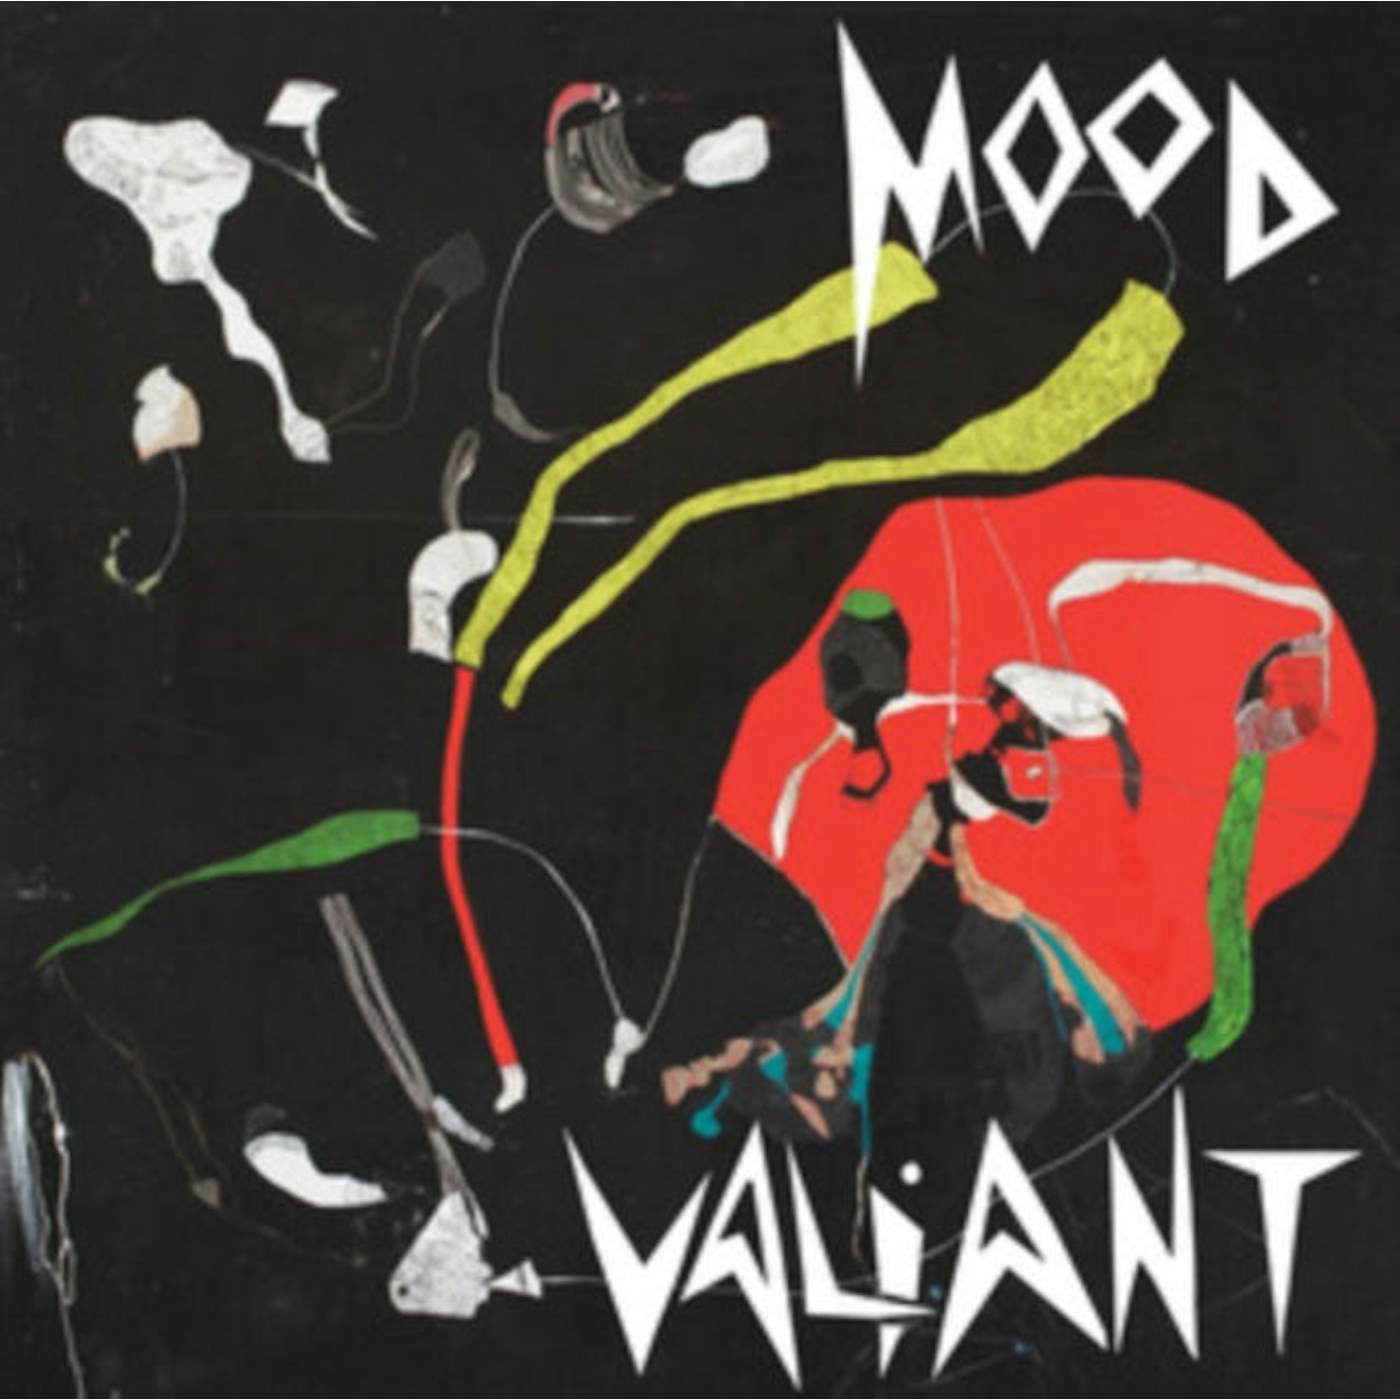 Hiatus Kaiyote LP Vinyl Record - Mood Valiant